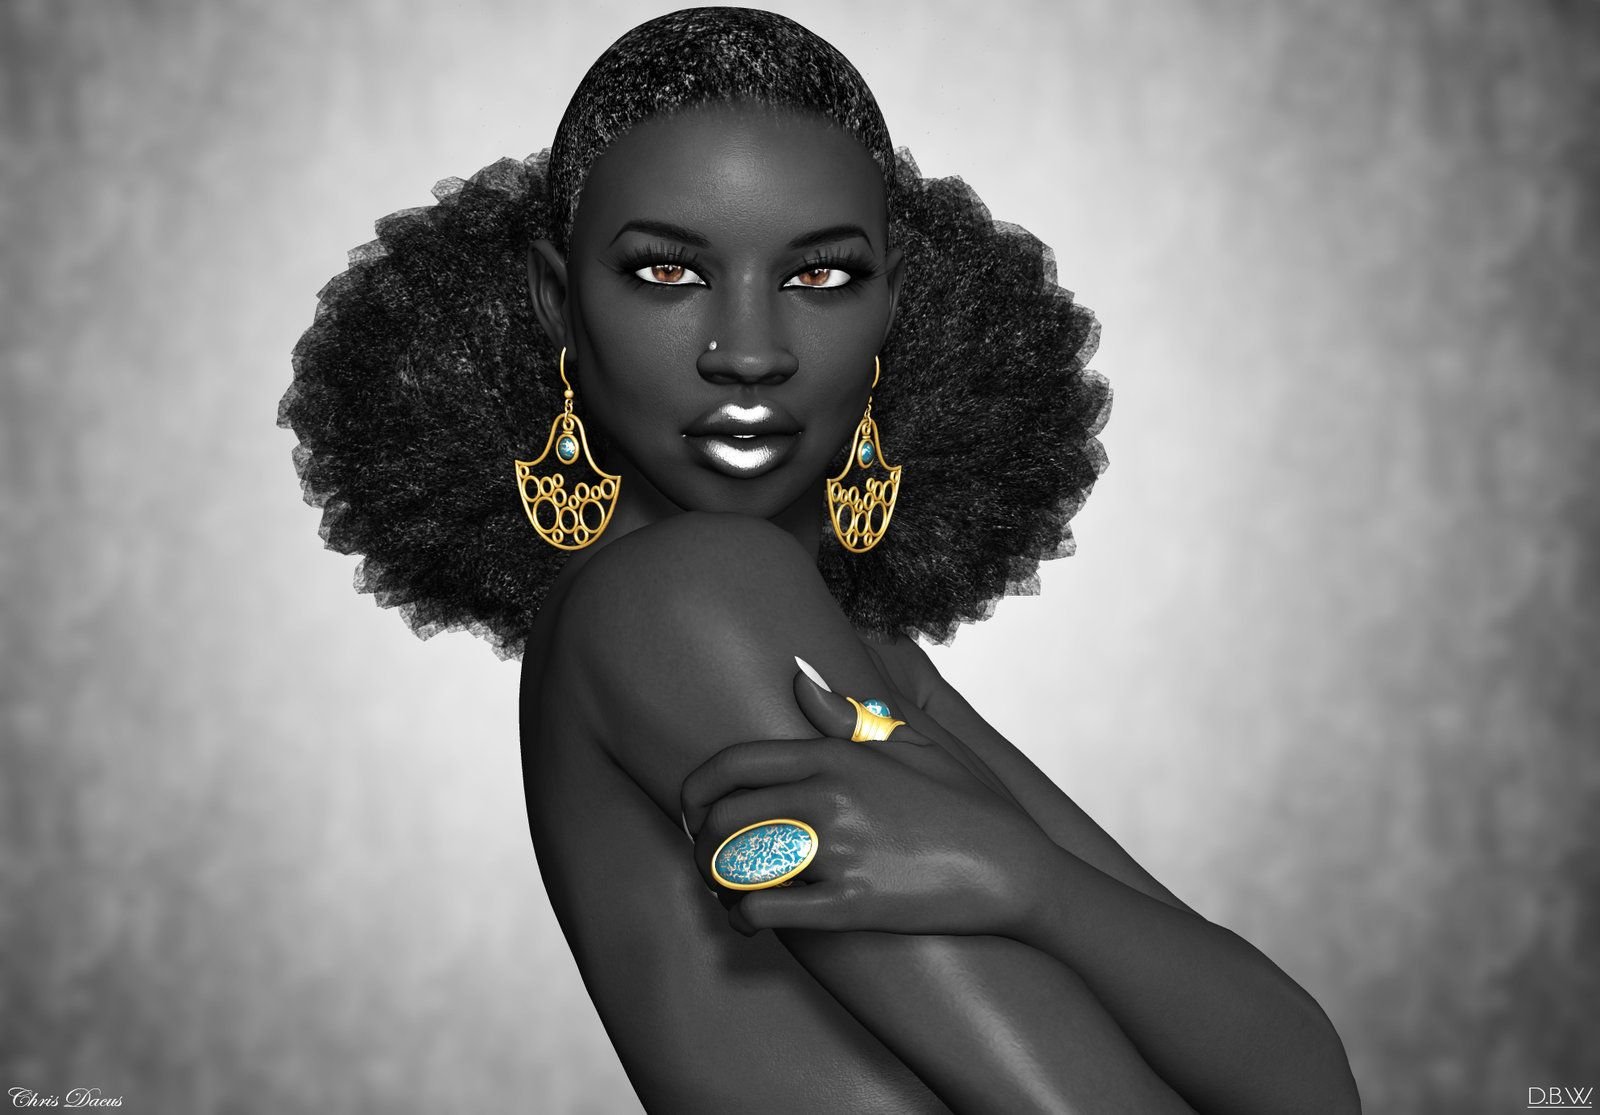 Негритянки 2 1. Брук Бейли темнокожая. Брук Бейли темнокожая модель. Афроамериканка певица Тейлор.